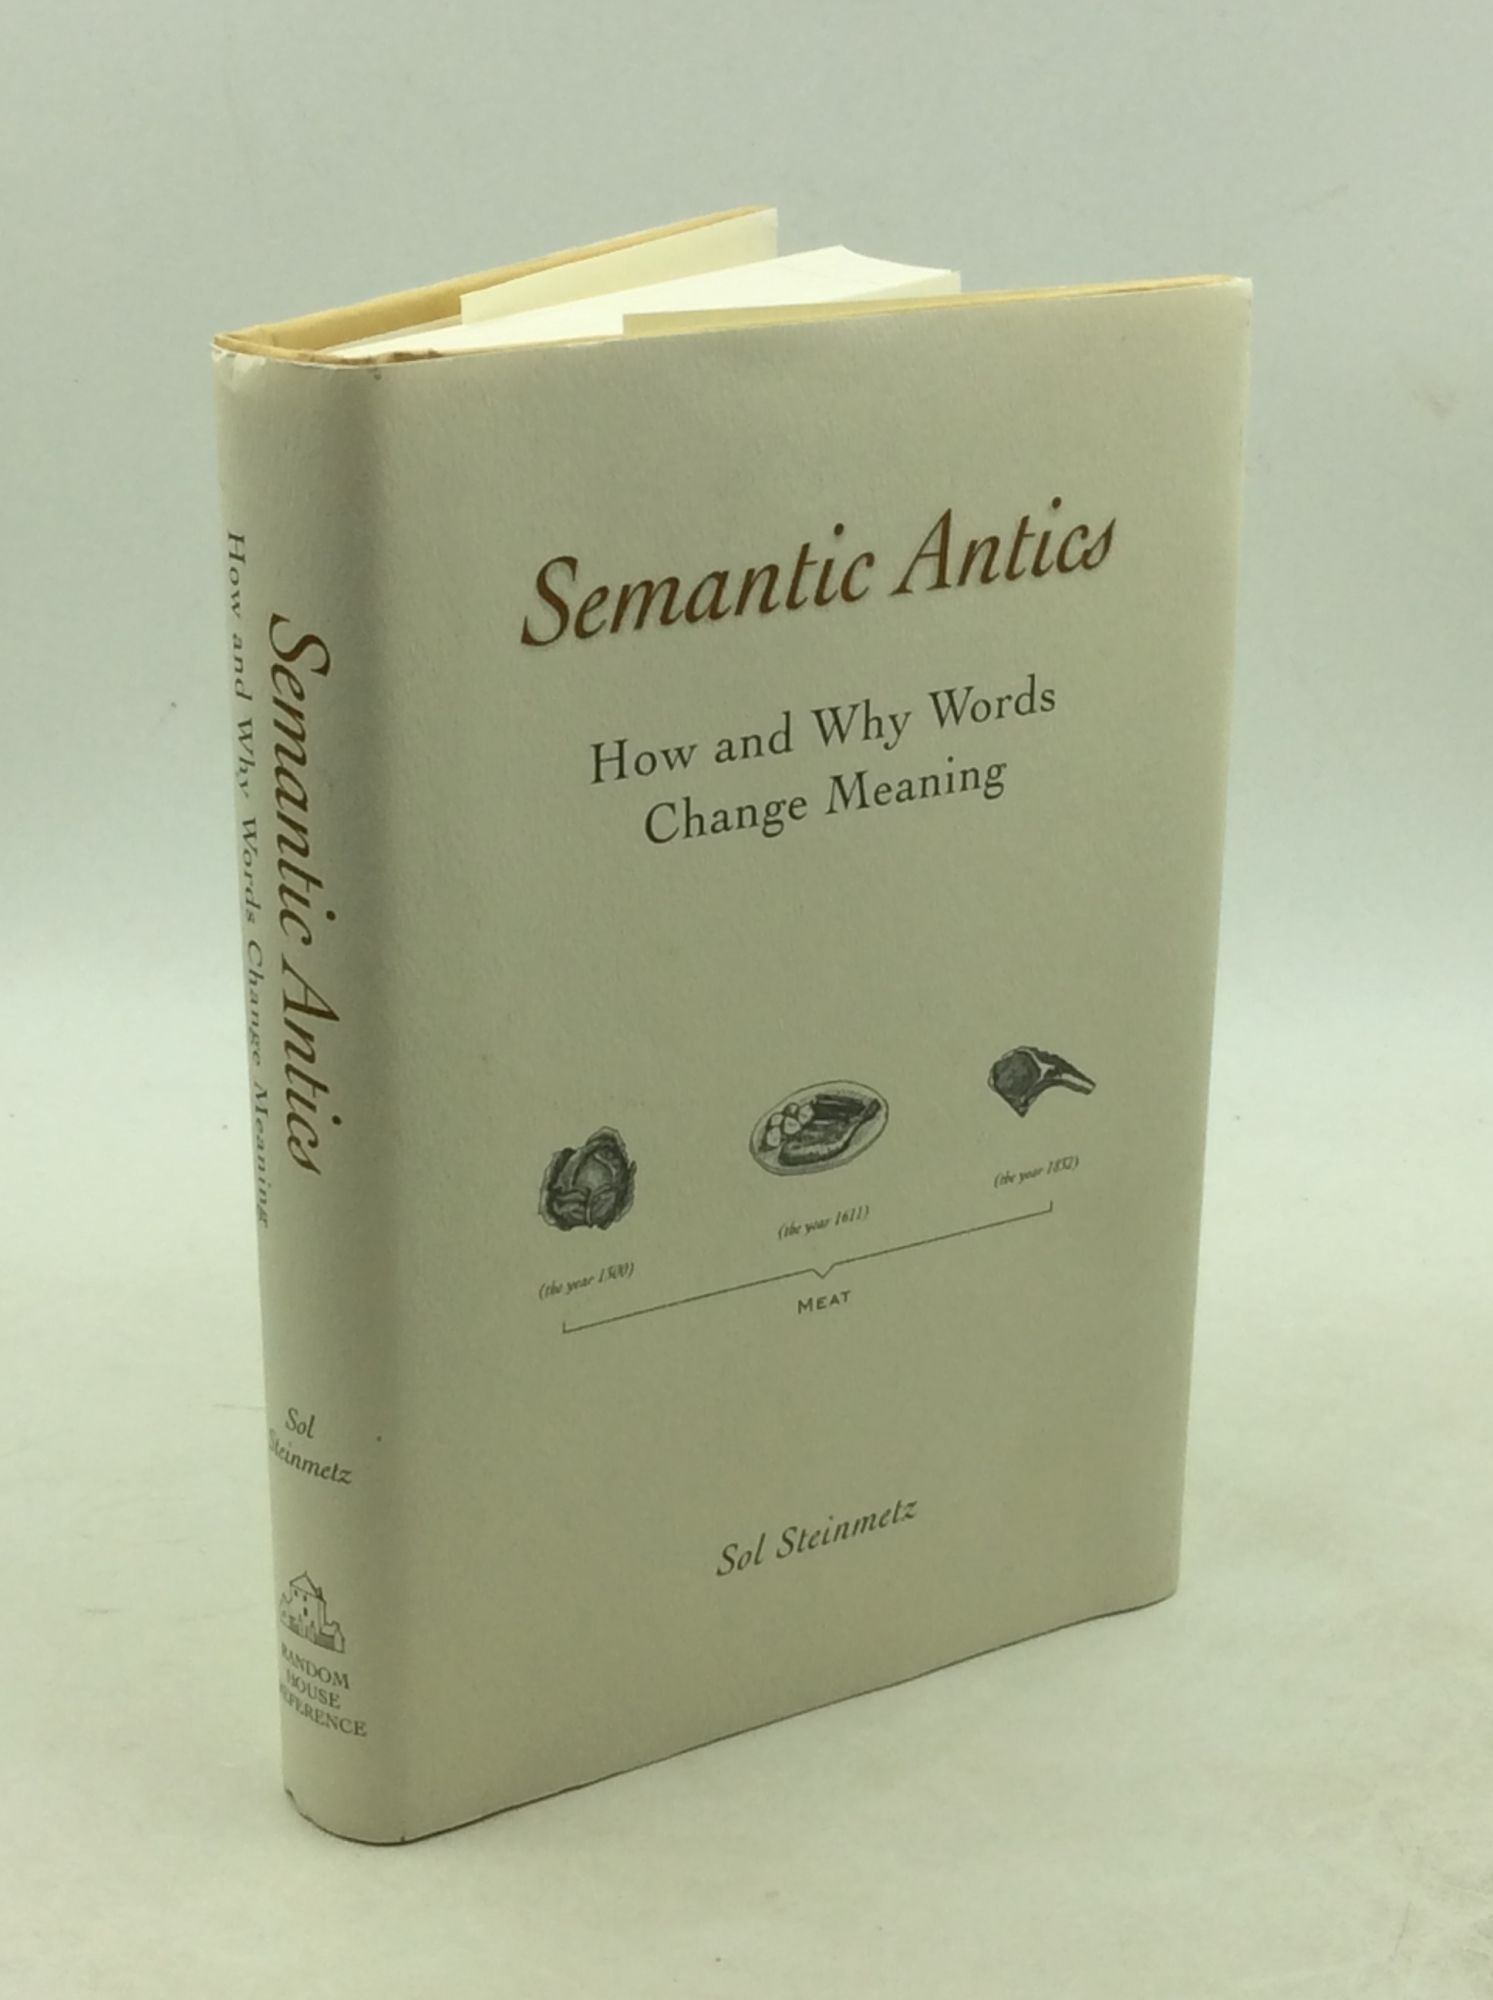 Sol Steinmetz - Semantics Antics: How and Why Words Change Meaning